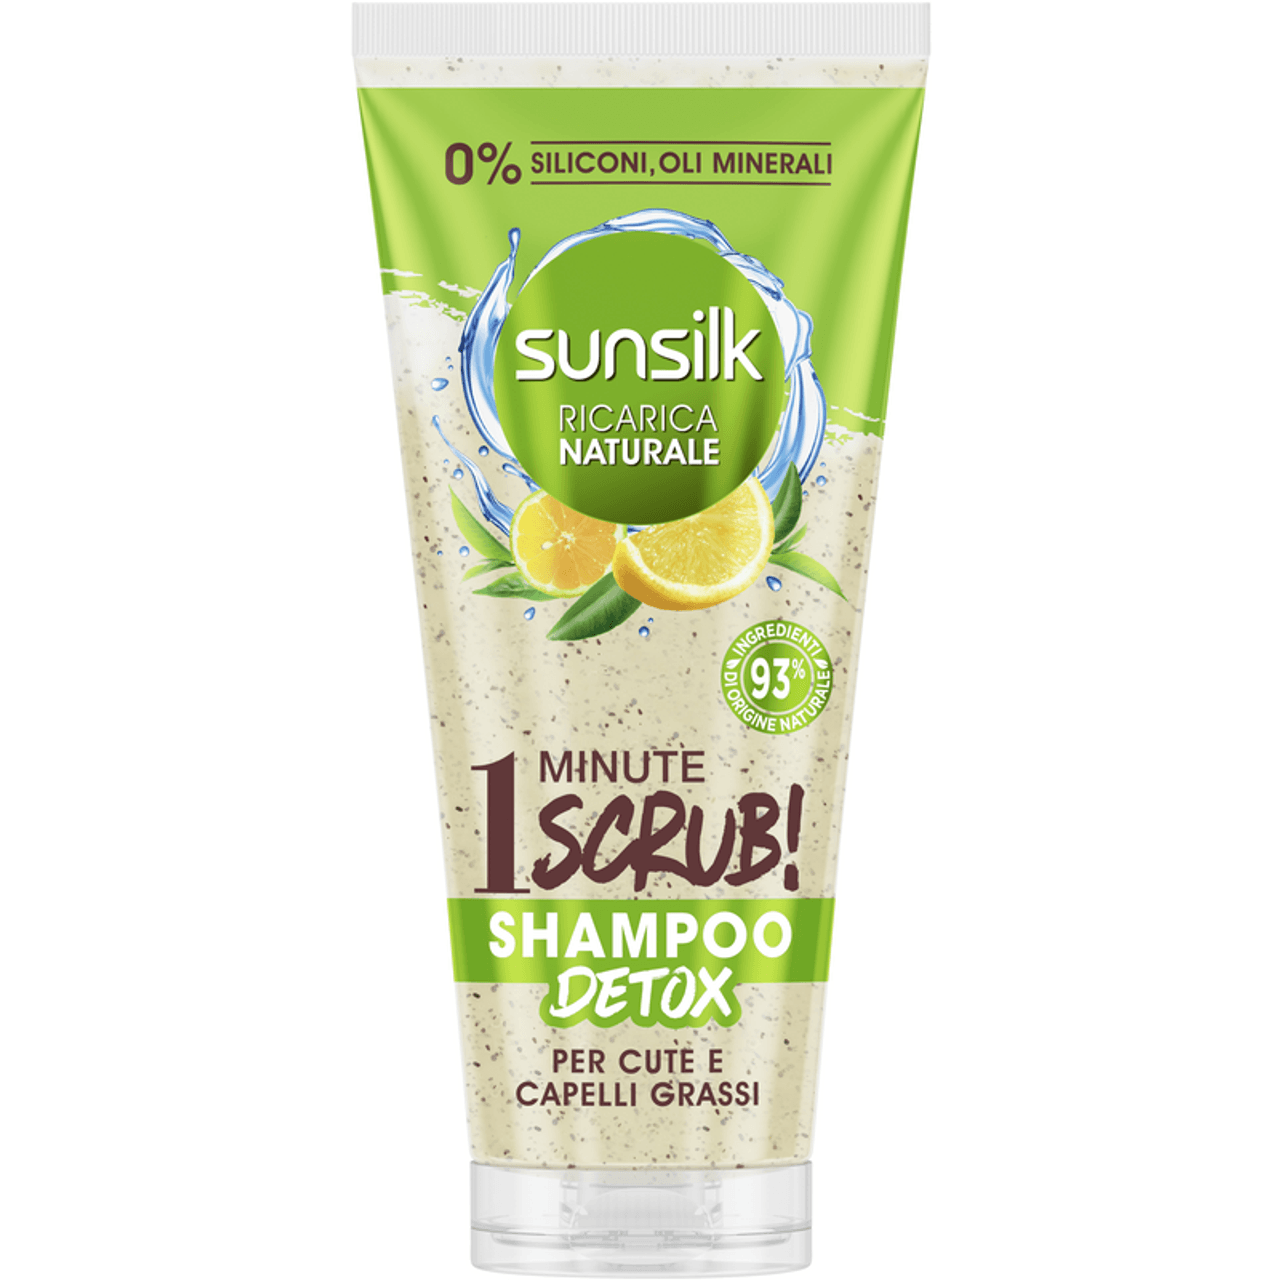 Sunsilk Shampoo Detox 1 Minute Scrub Capelli Grassi - Jasmine Parfums- [ean]